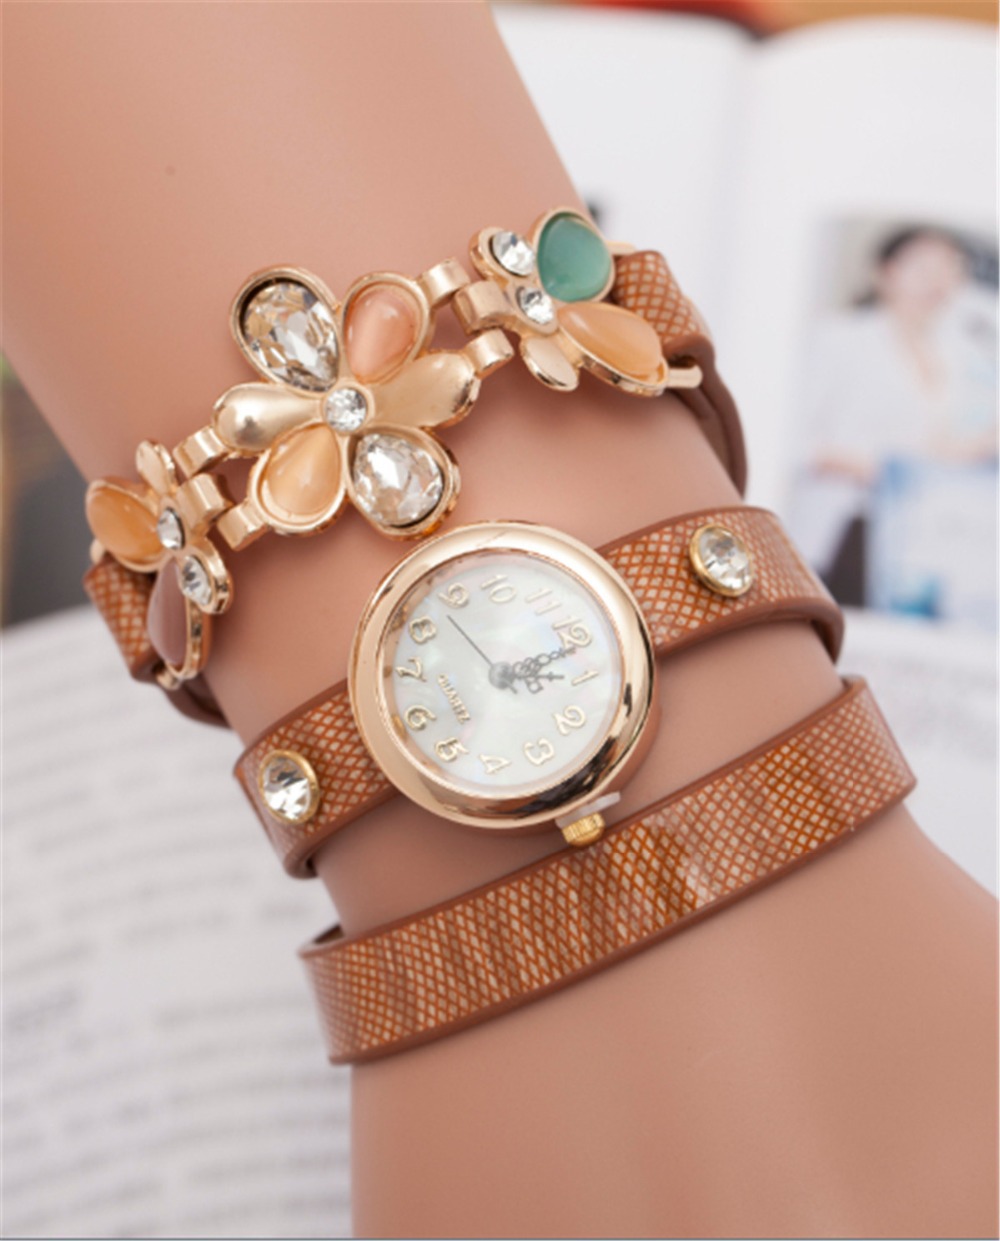 New arrival summer style relogio masculino quartz watch High quality women s watch Sloggi digital Bracelet